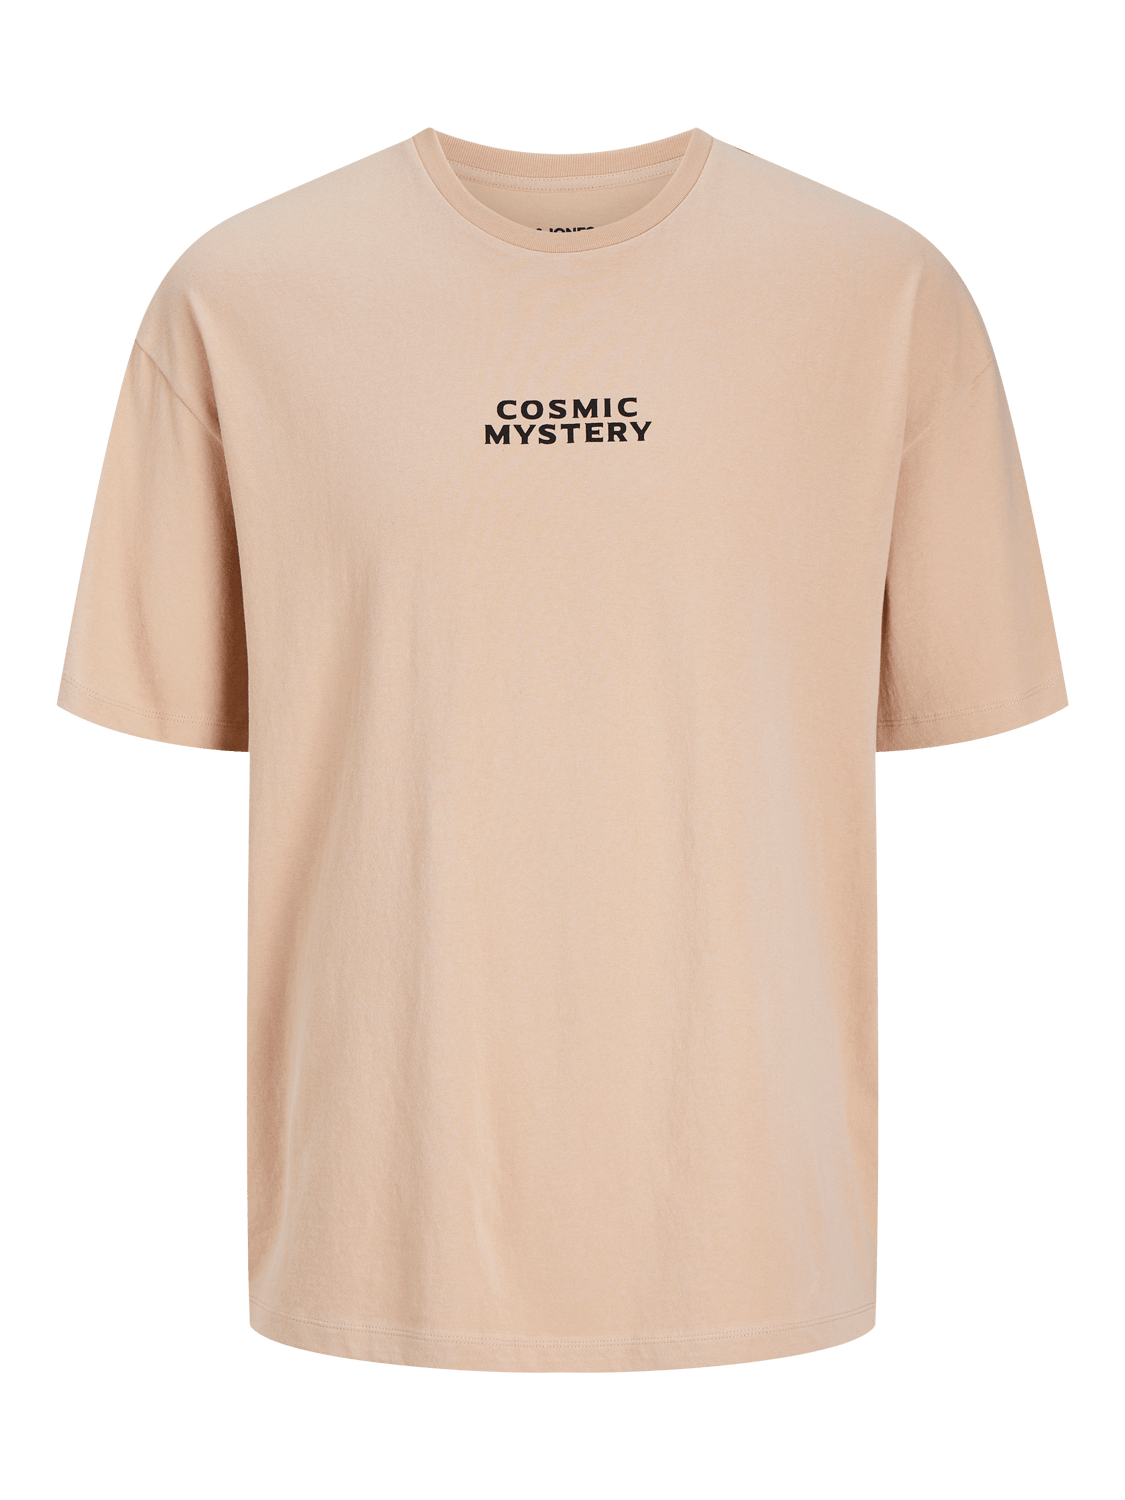 Camiseta estampada rosa claro -JORMYSTERY